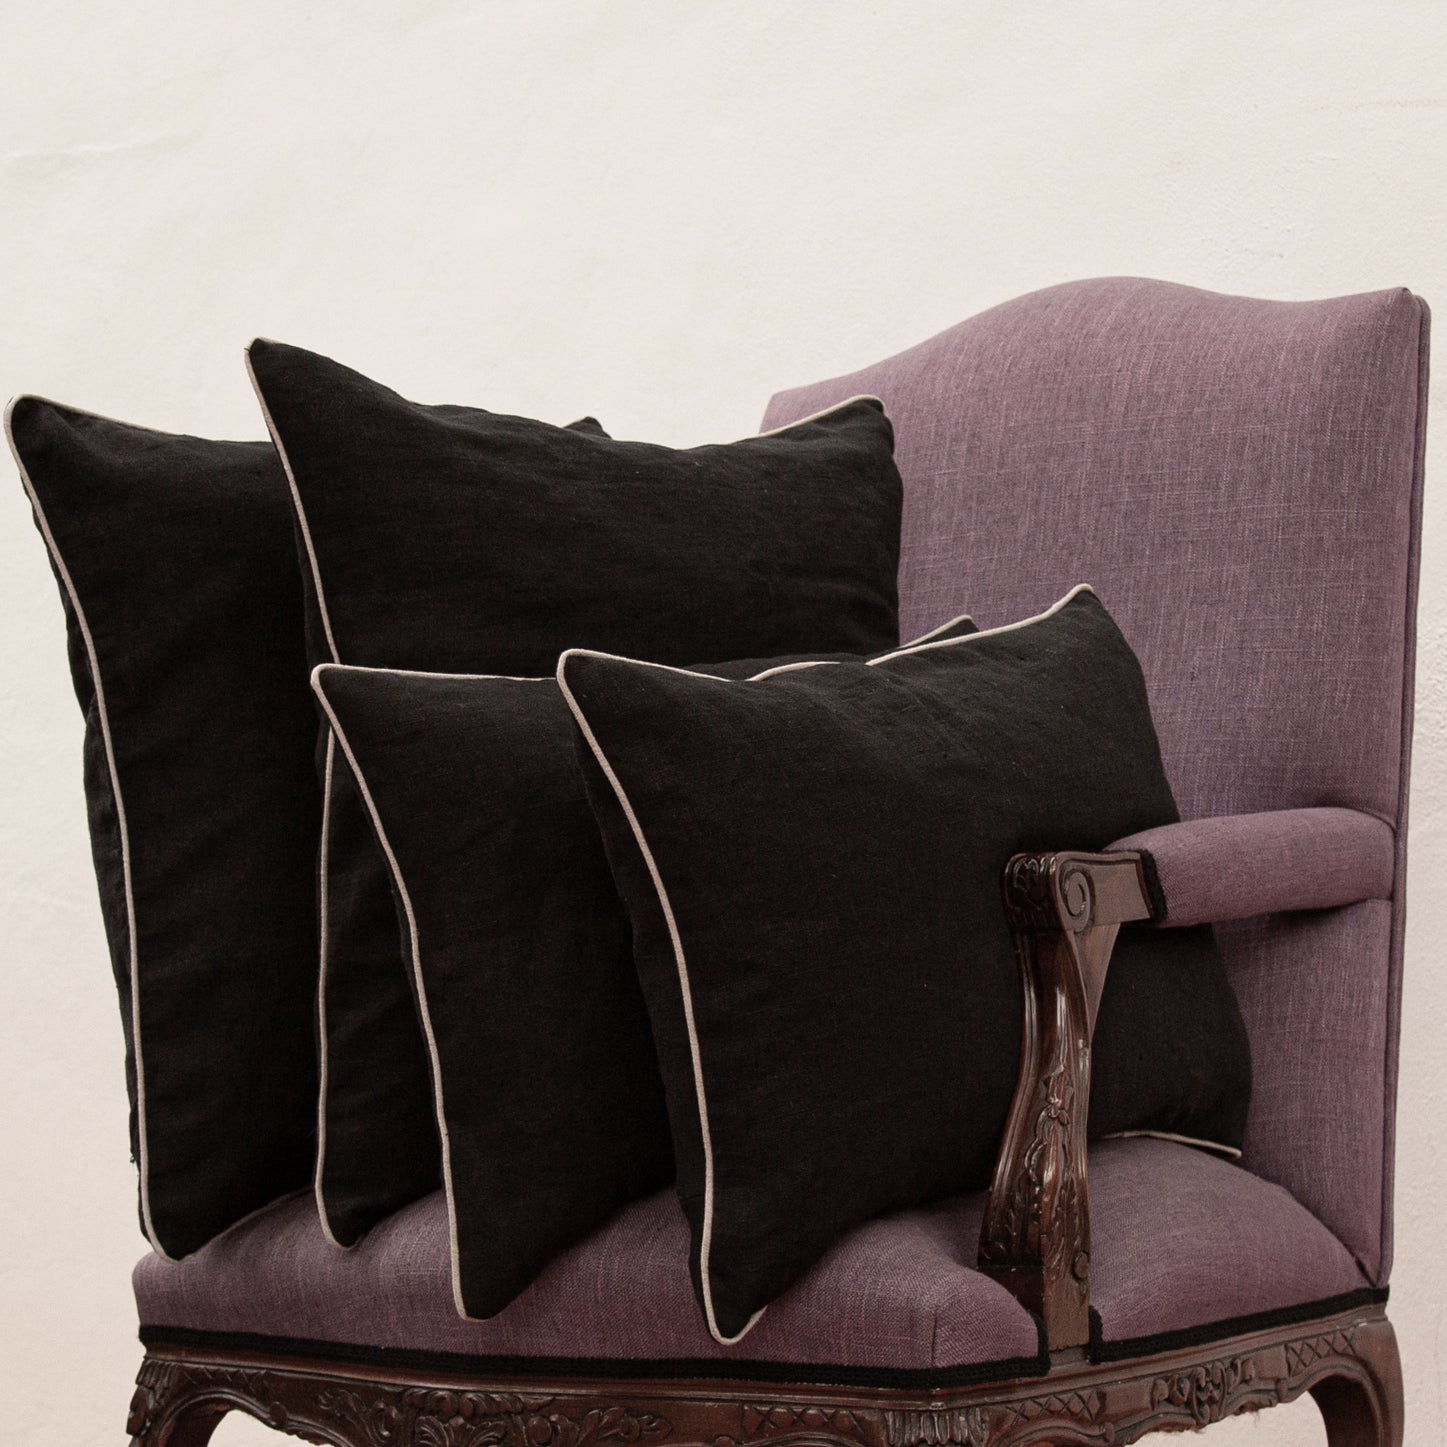 Cojines de lino negro con borde de lino natural. Grupo de varios tamaños en sillón de lino morado.